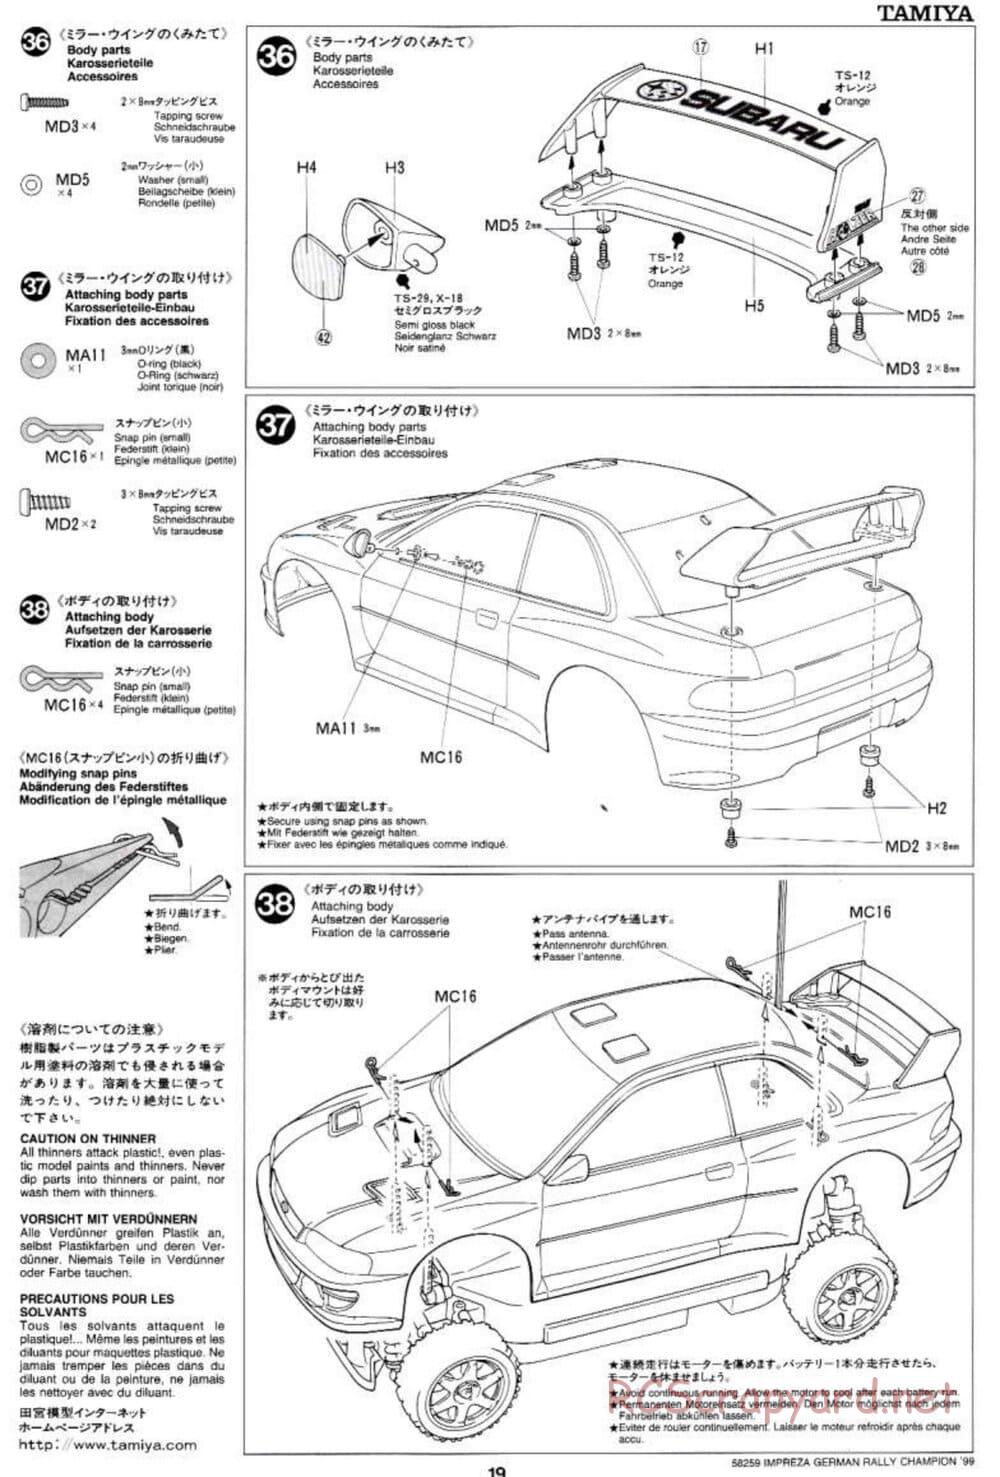 Tamiya - Subaru Impreza German Rally Champion 99 - TB-01 Chassis - Manual - Page 19